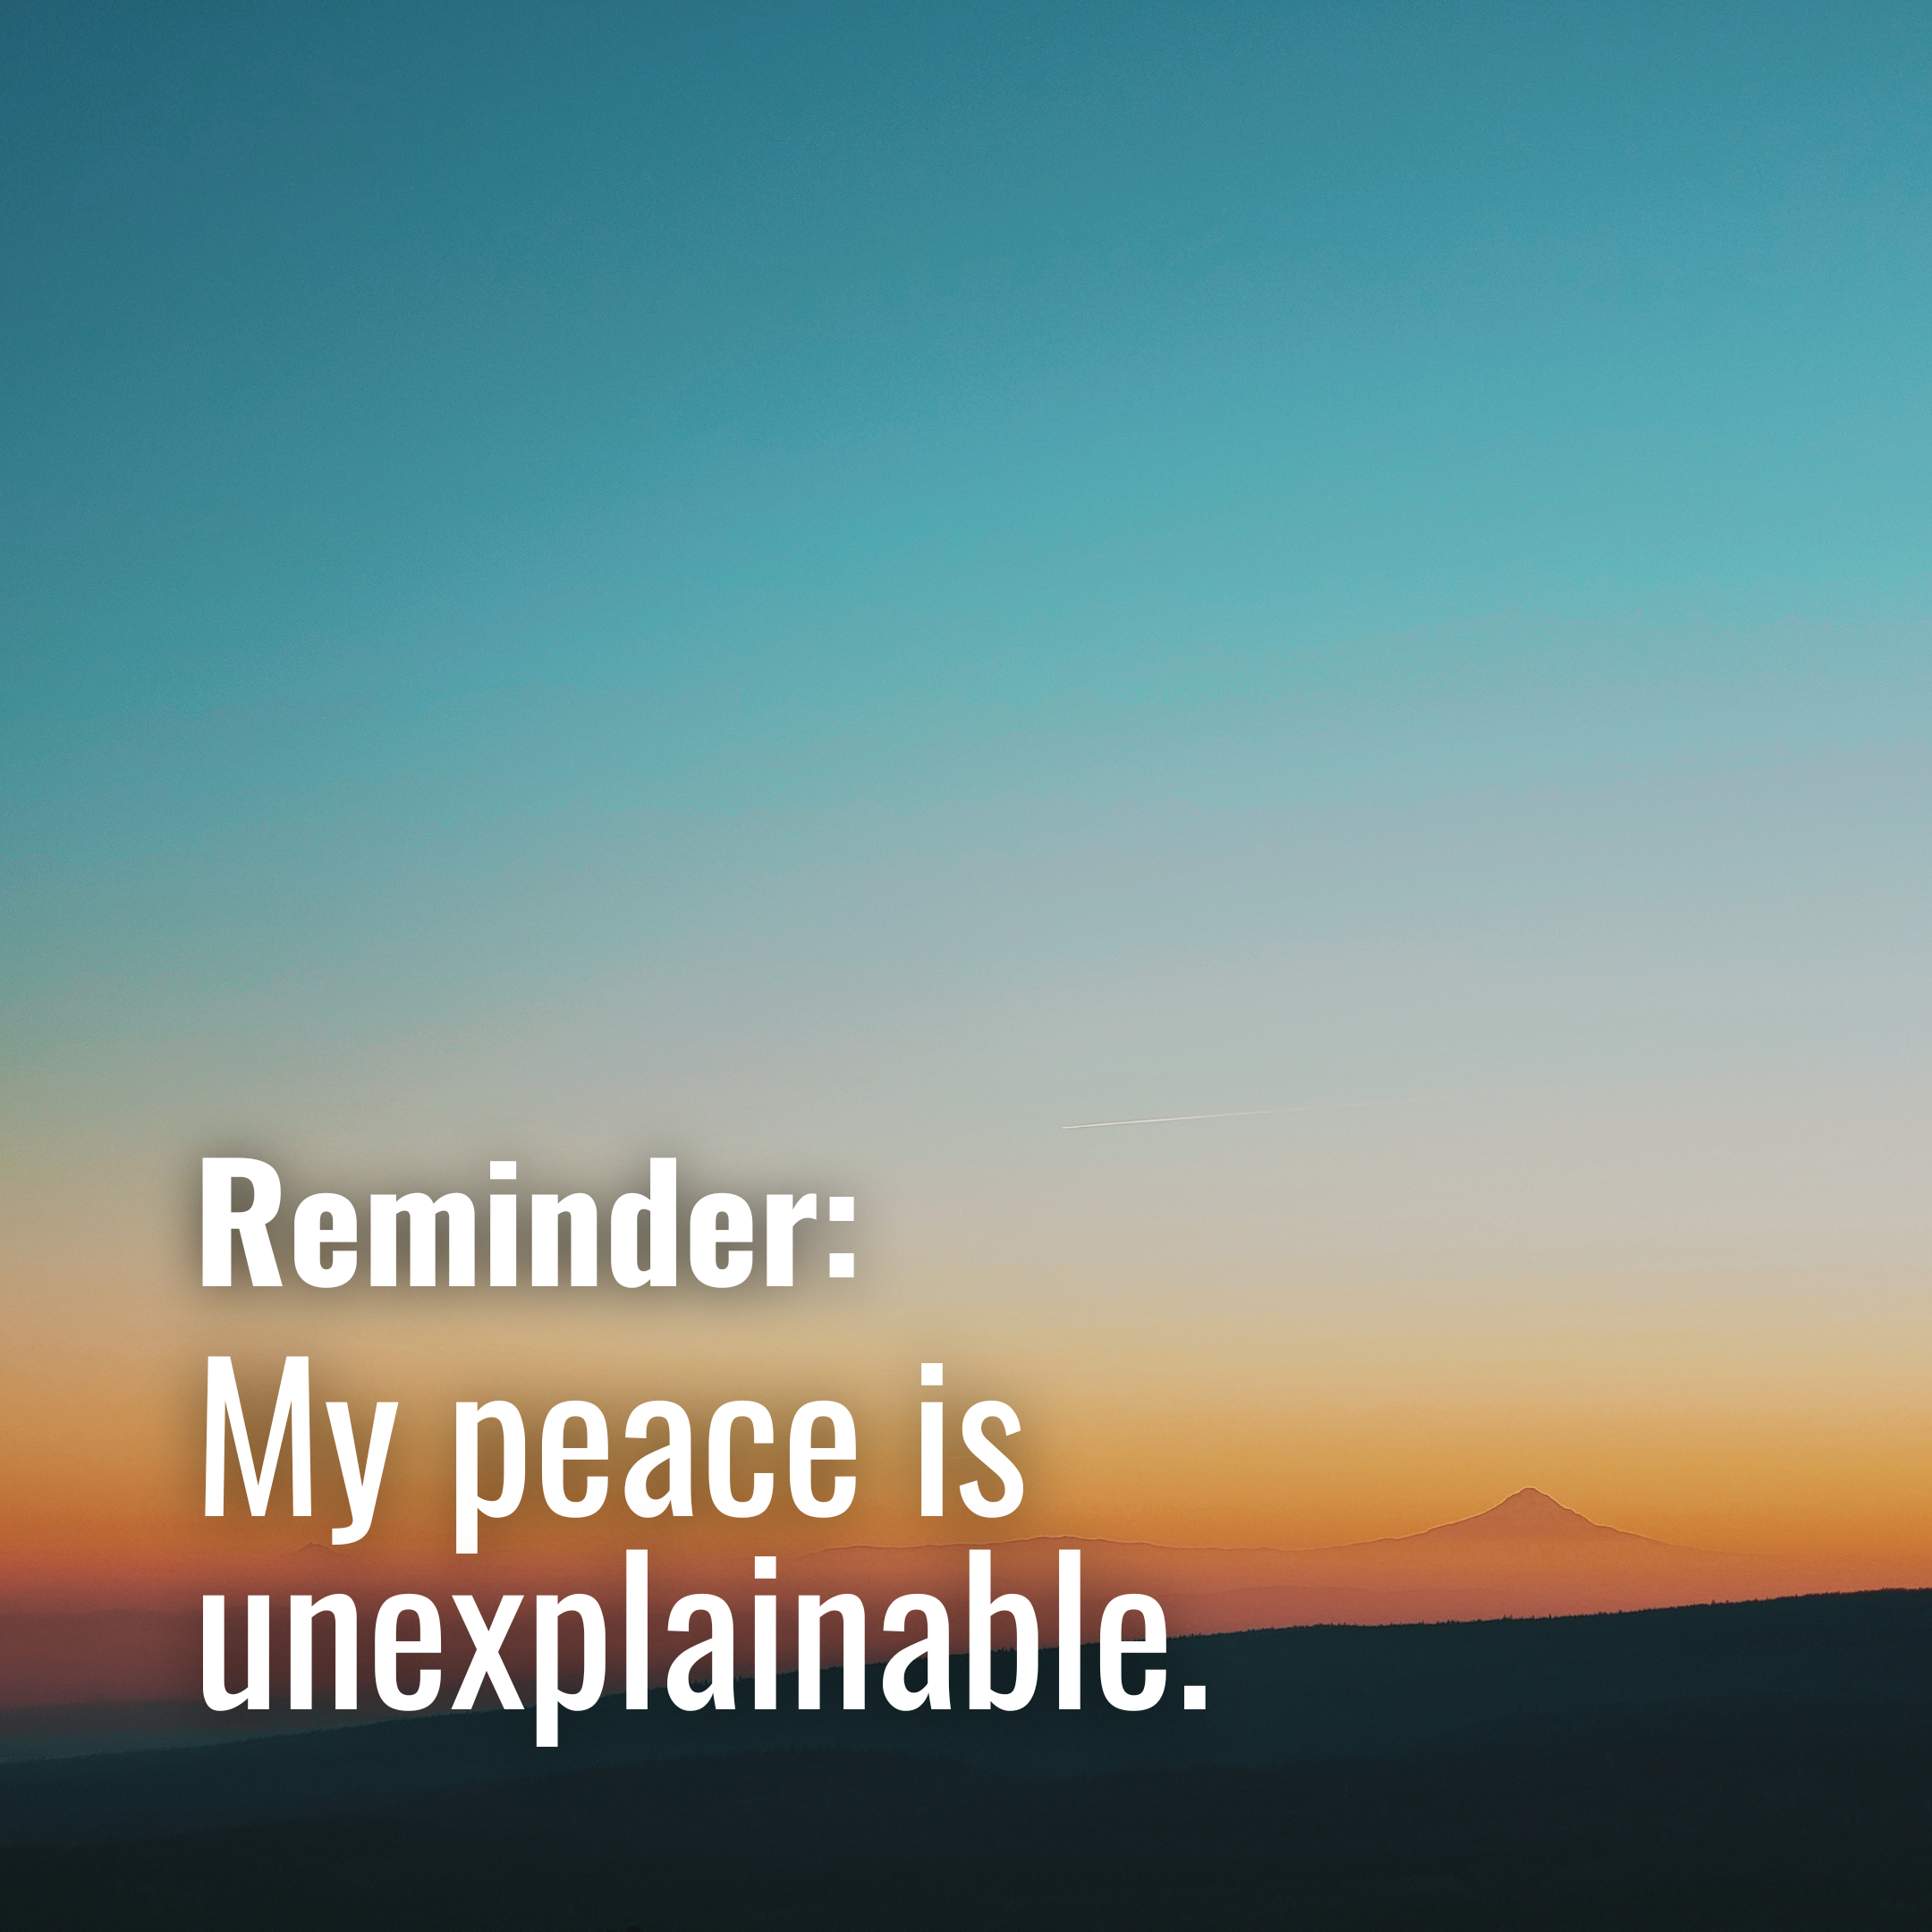 My peace is unexplainable. ✌